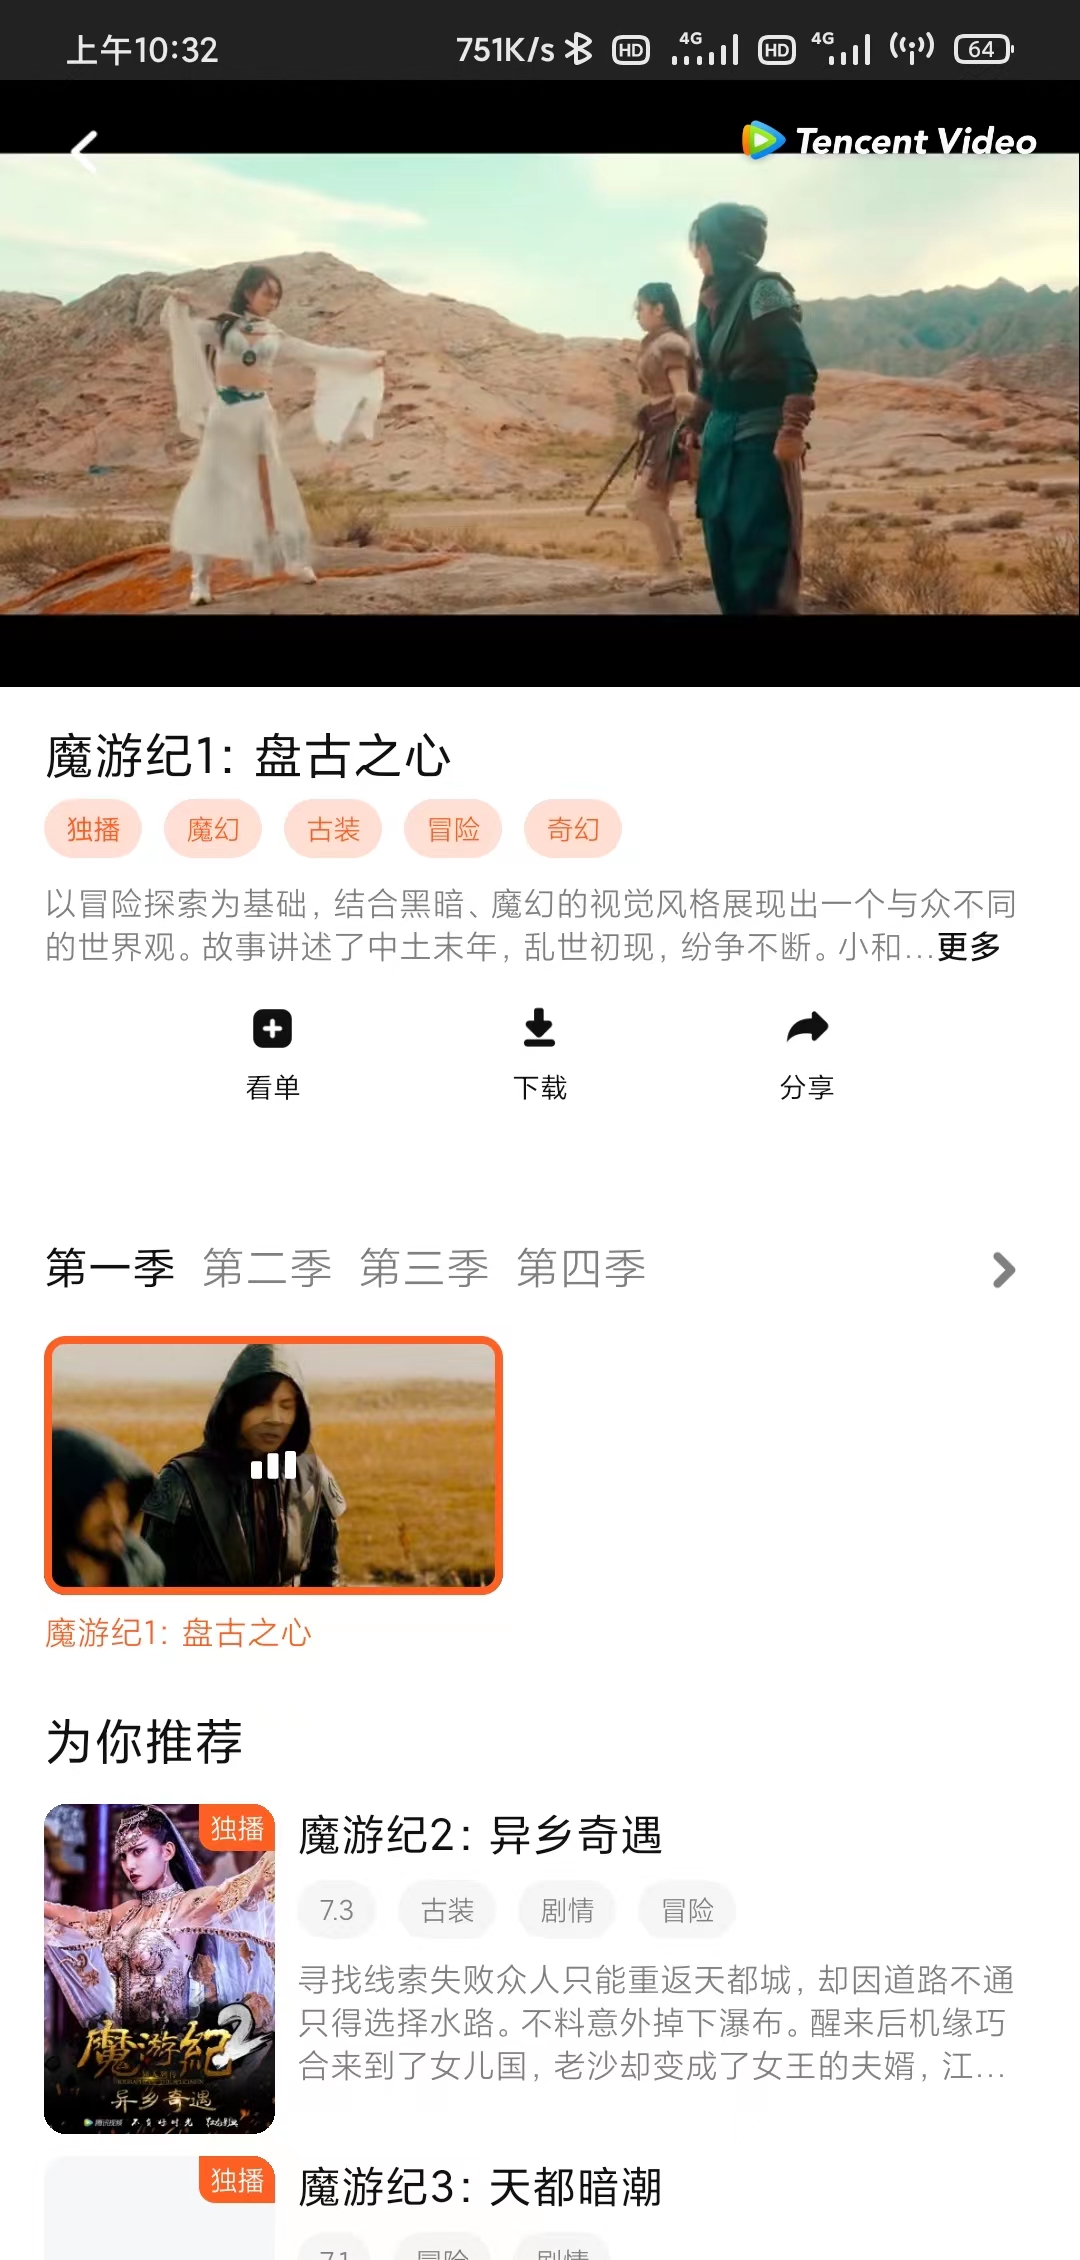 Tencent Video – 国际版腾讯视频